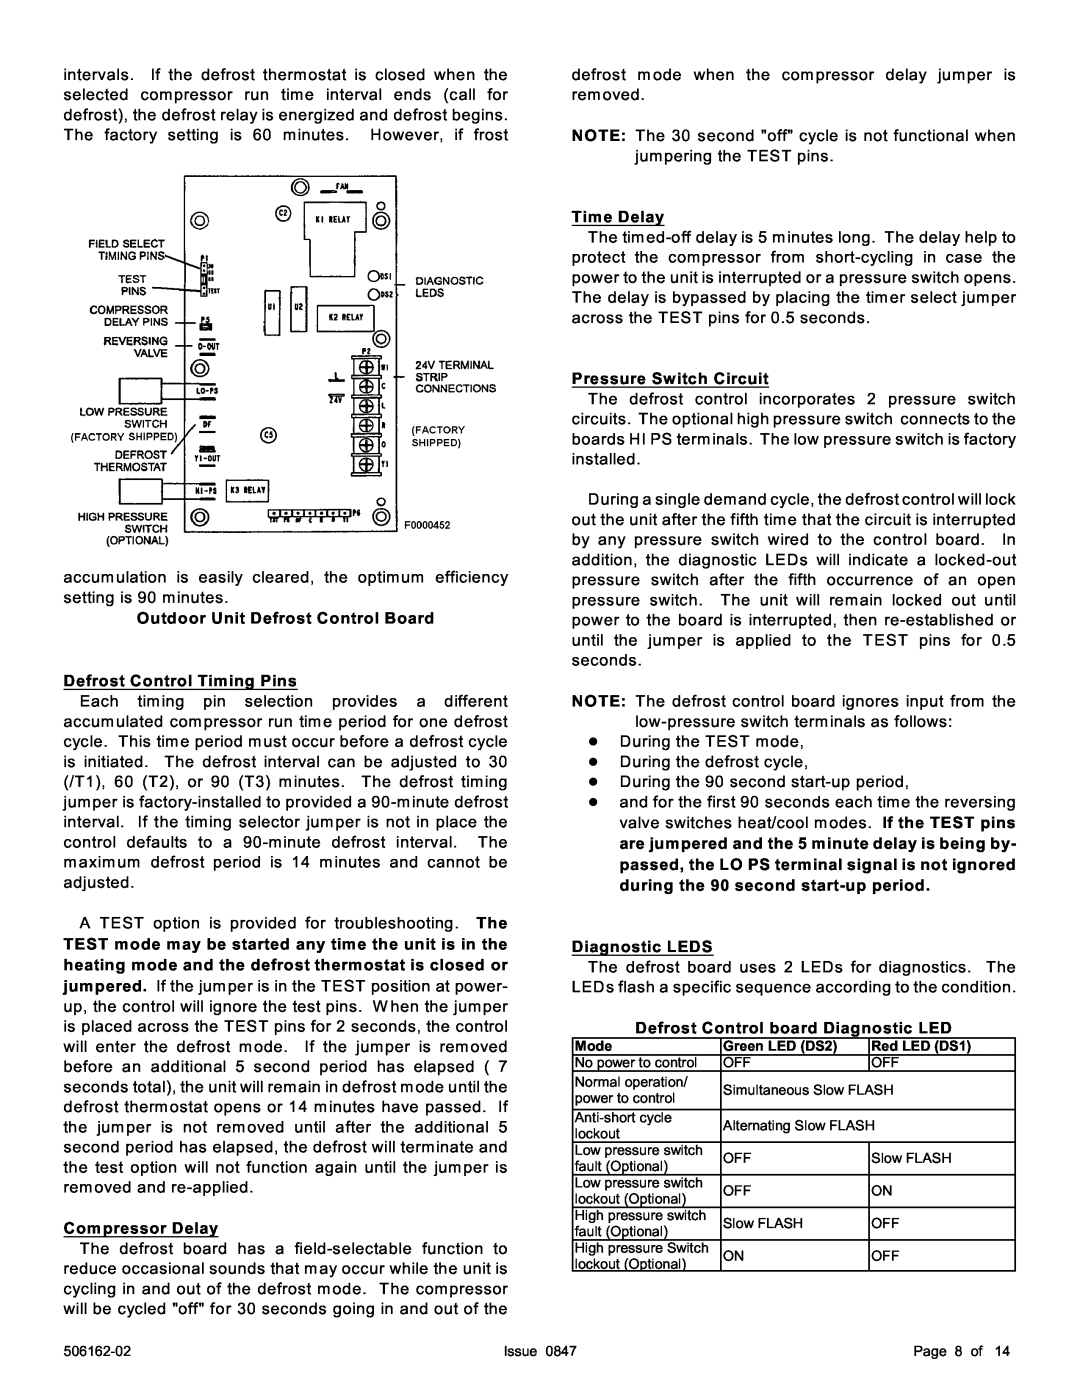 Ducane (HVAC) 2HP13/14 Outdoor Unit Defrost Control Board, Defrost Control Timing Pins, Compressor Delay, Time Delay 